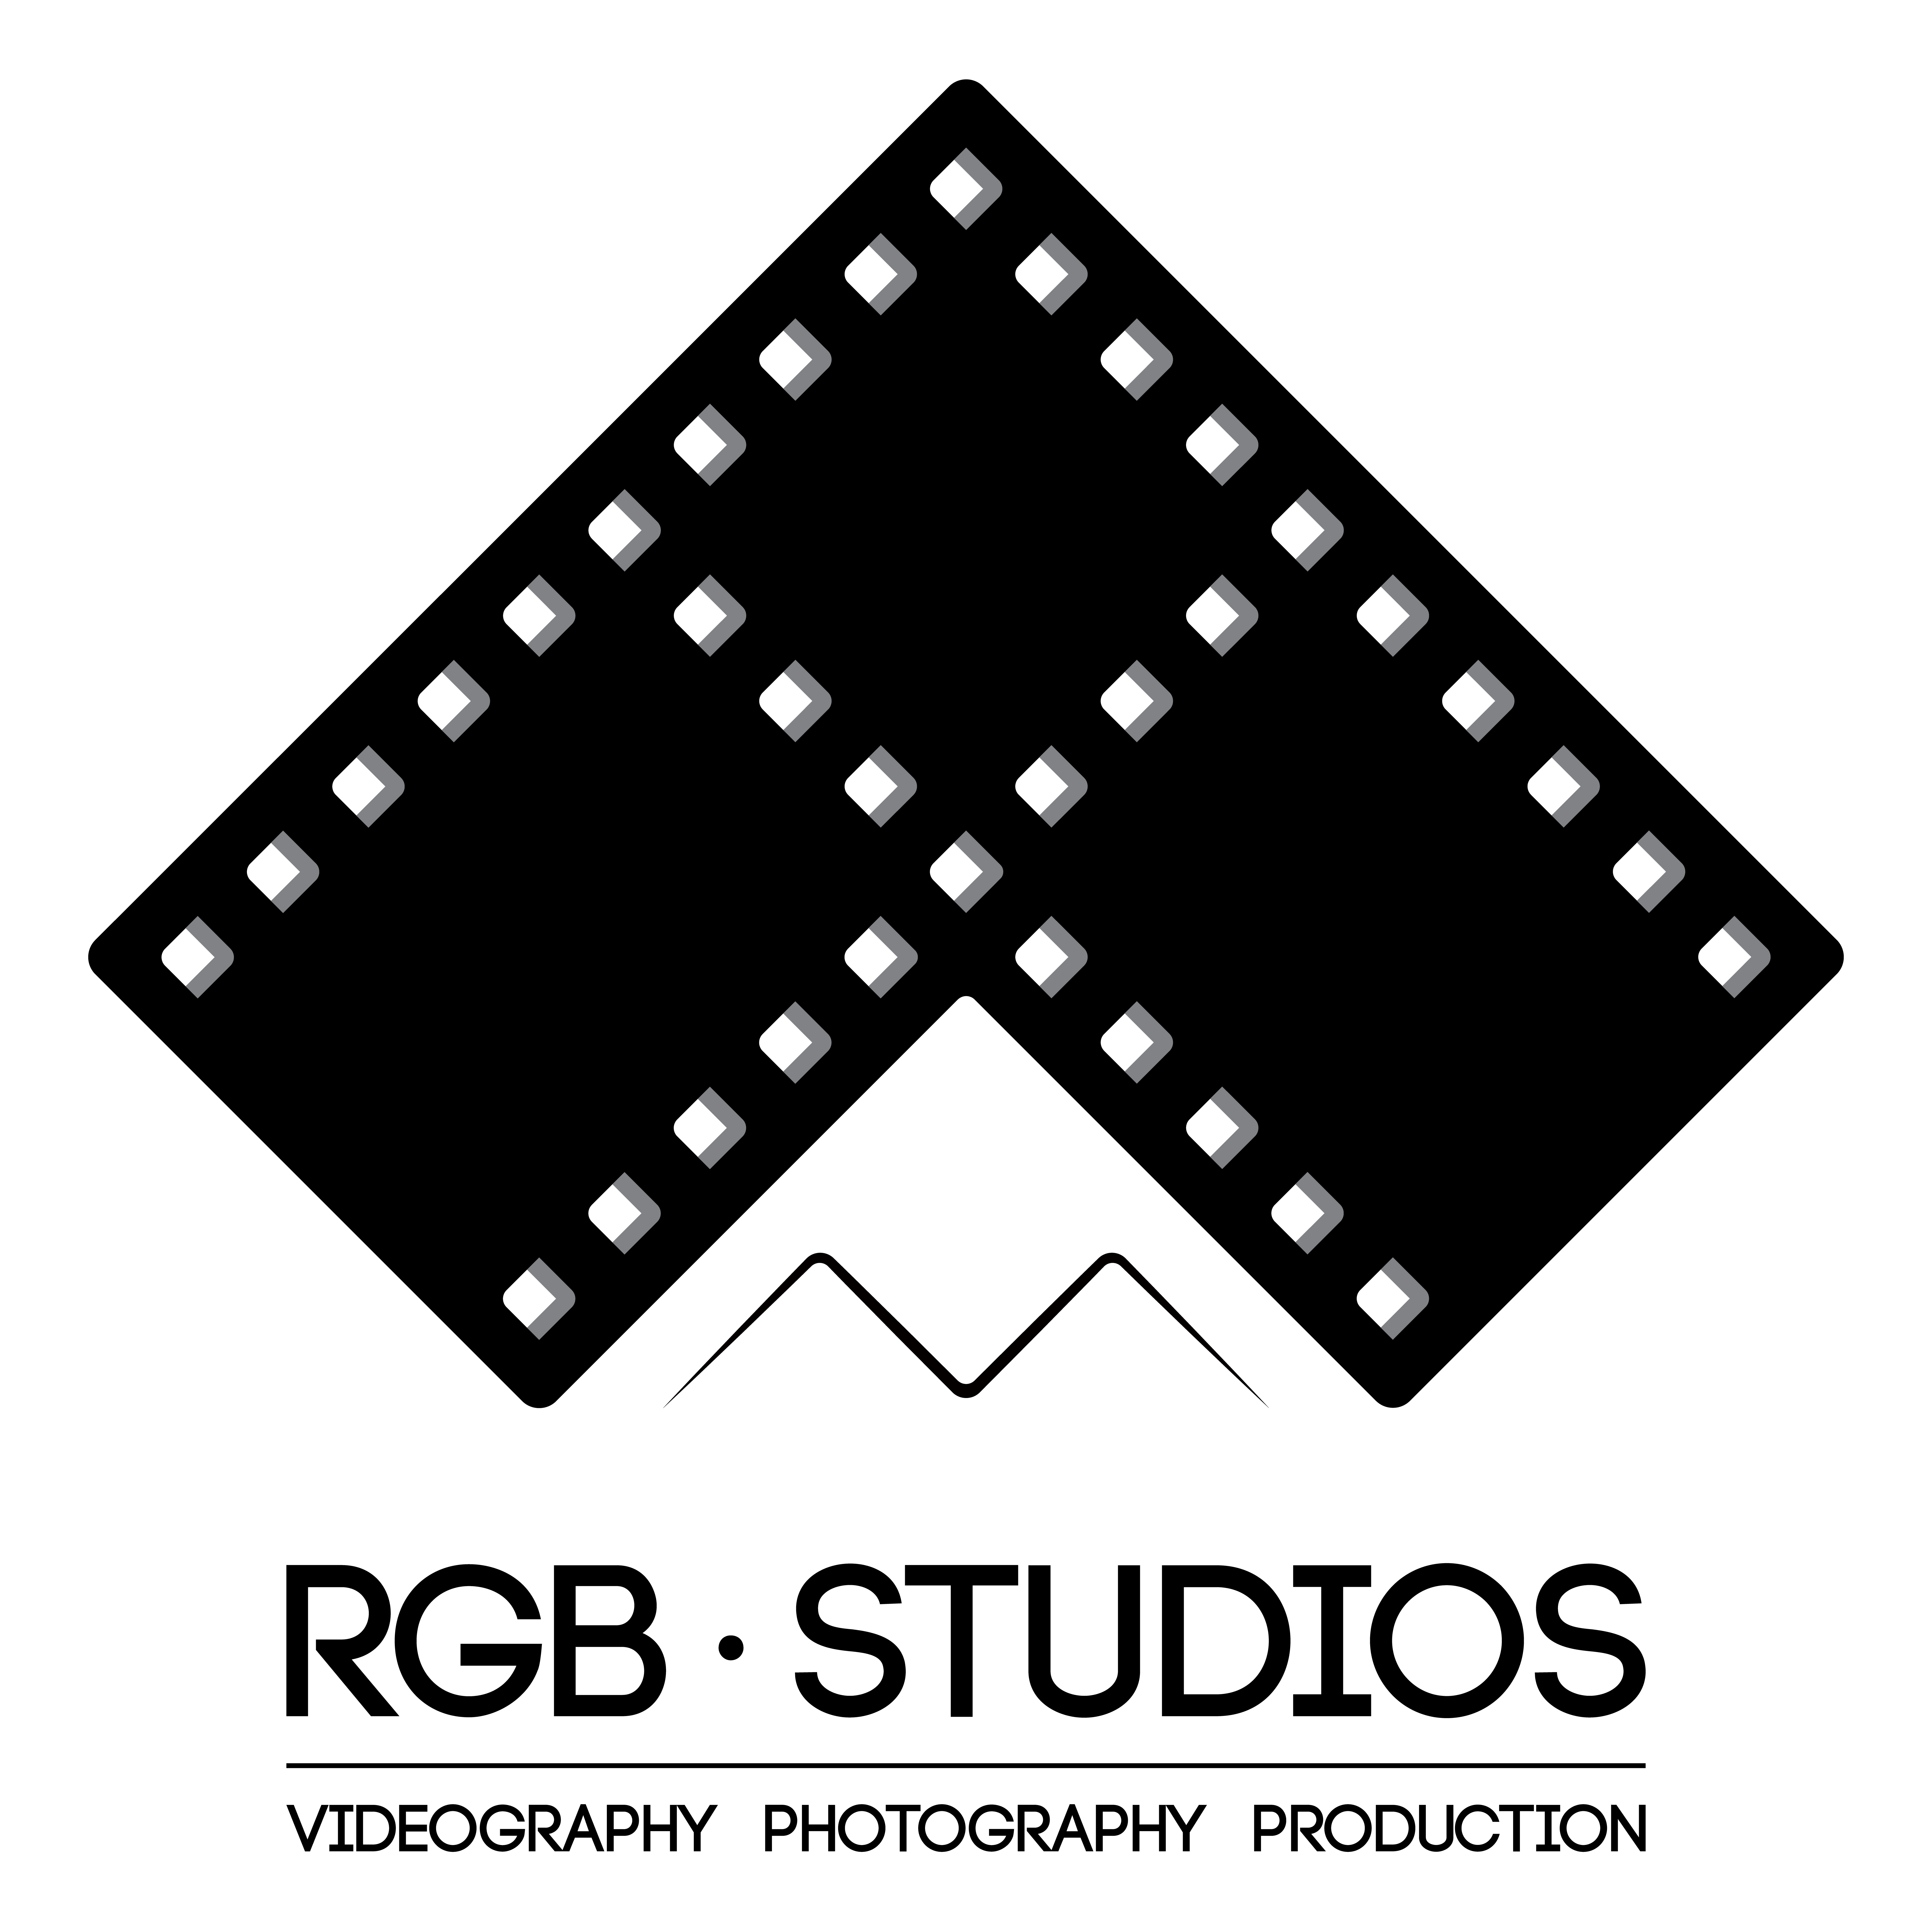 rgbstudios.logo.BLACK